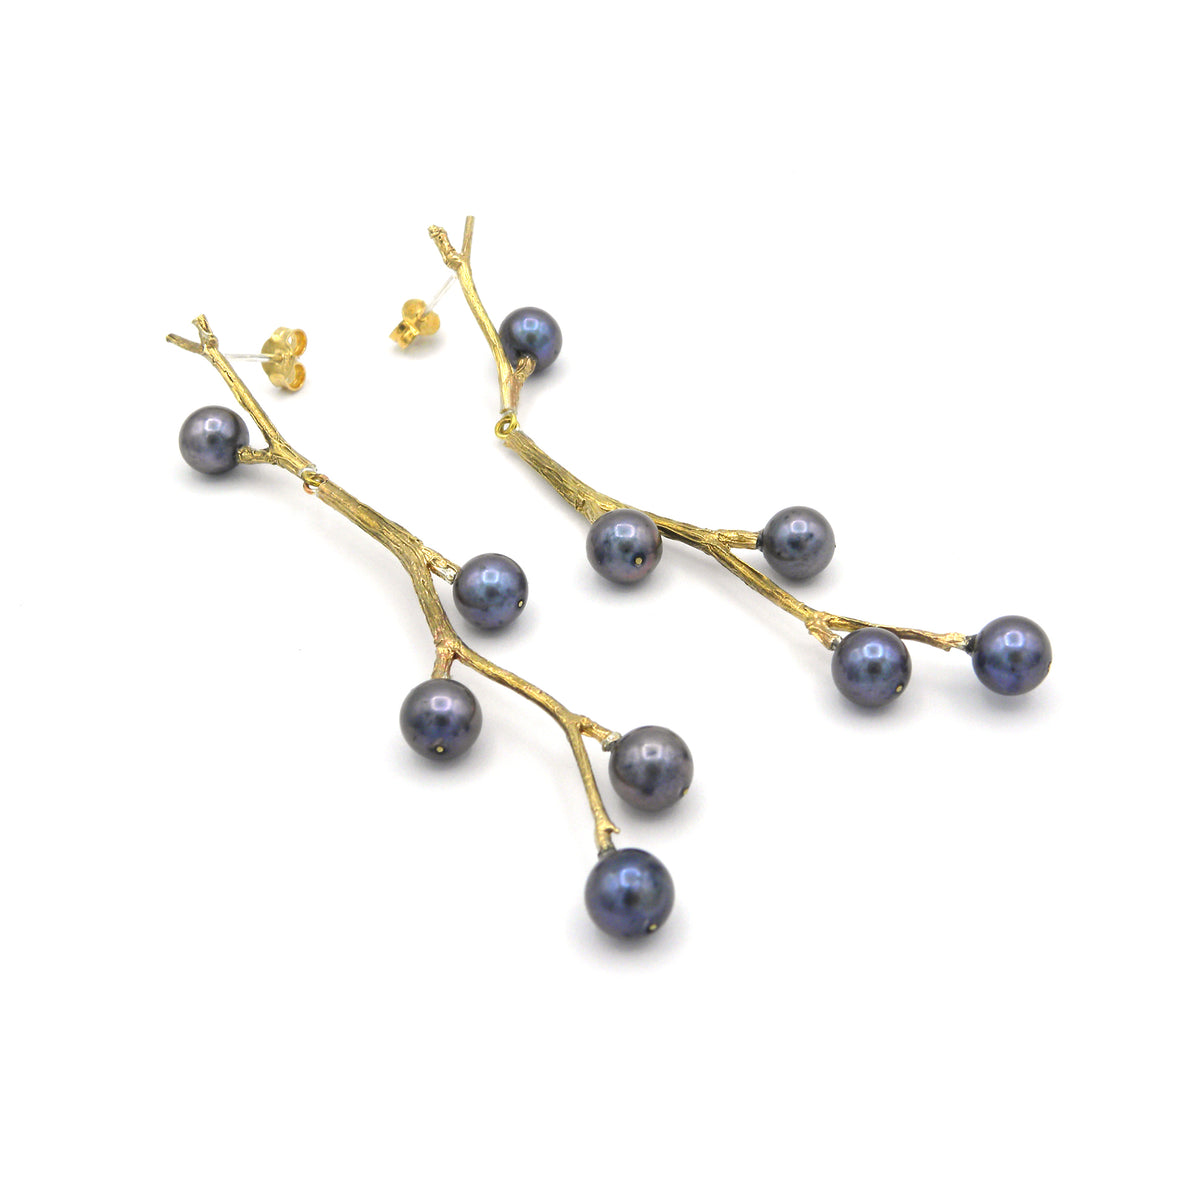 Twig and grey pearl earrings